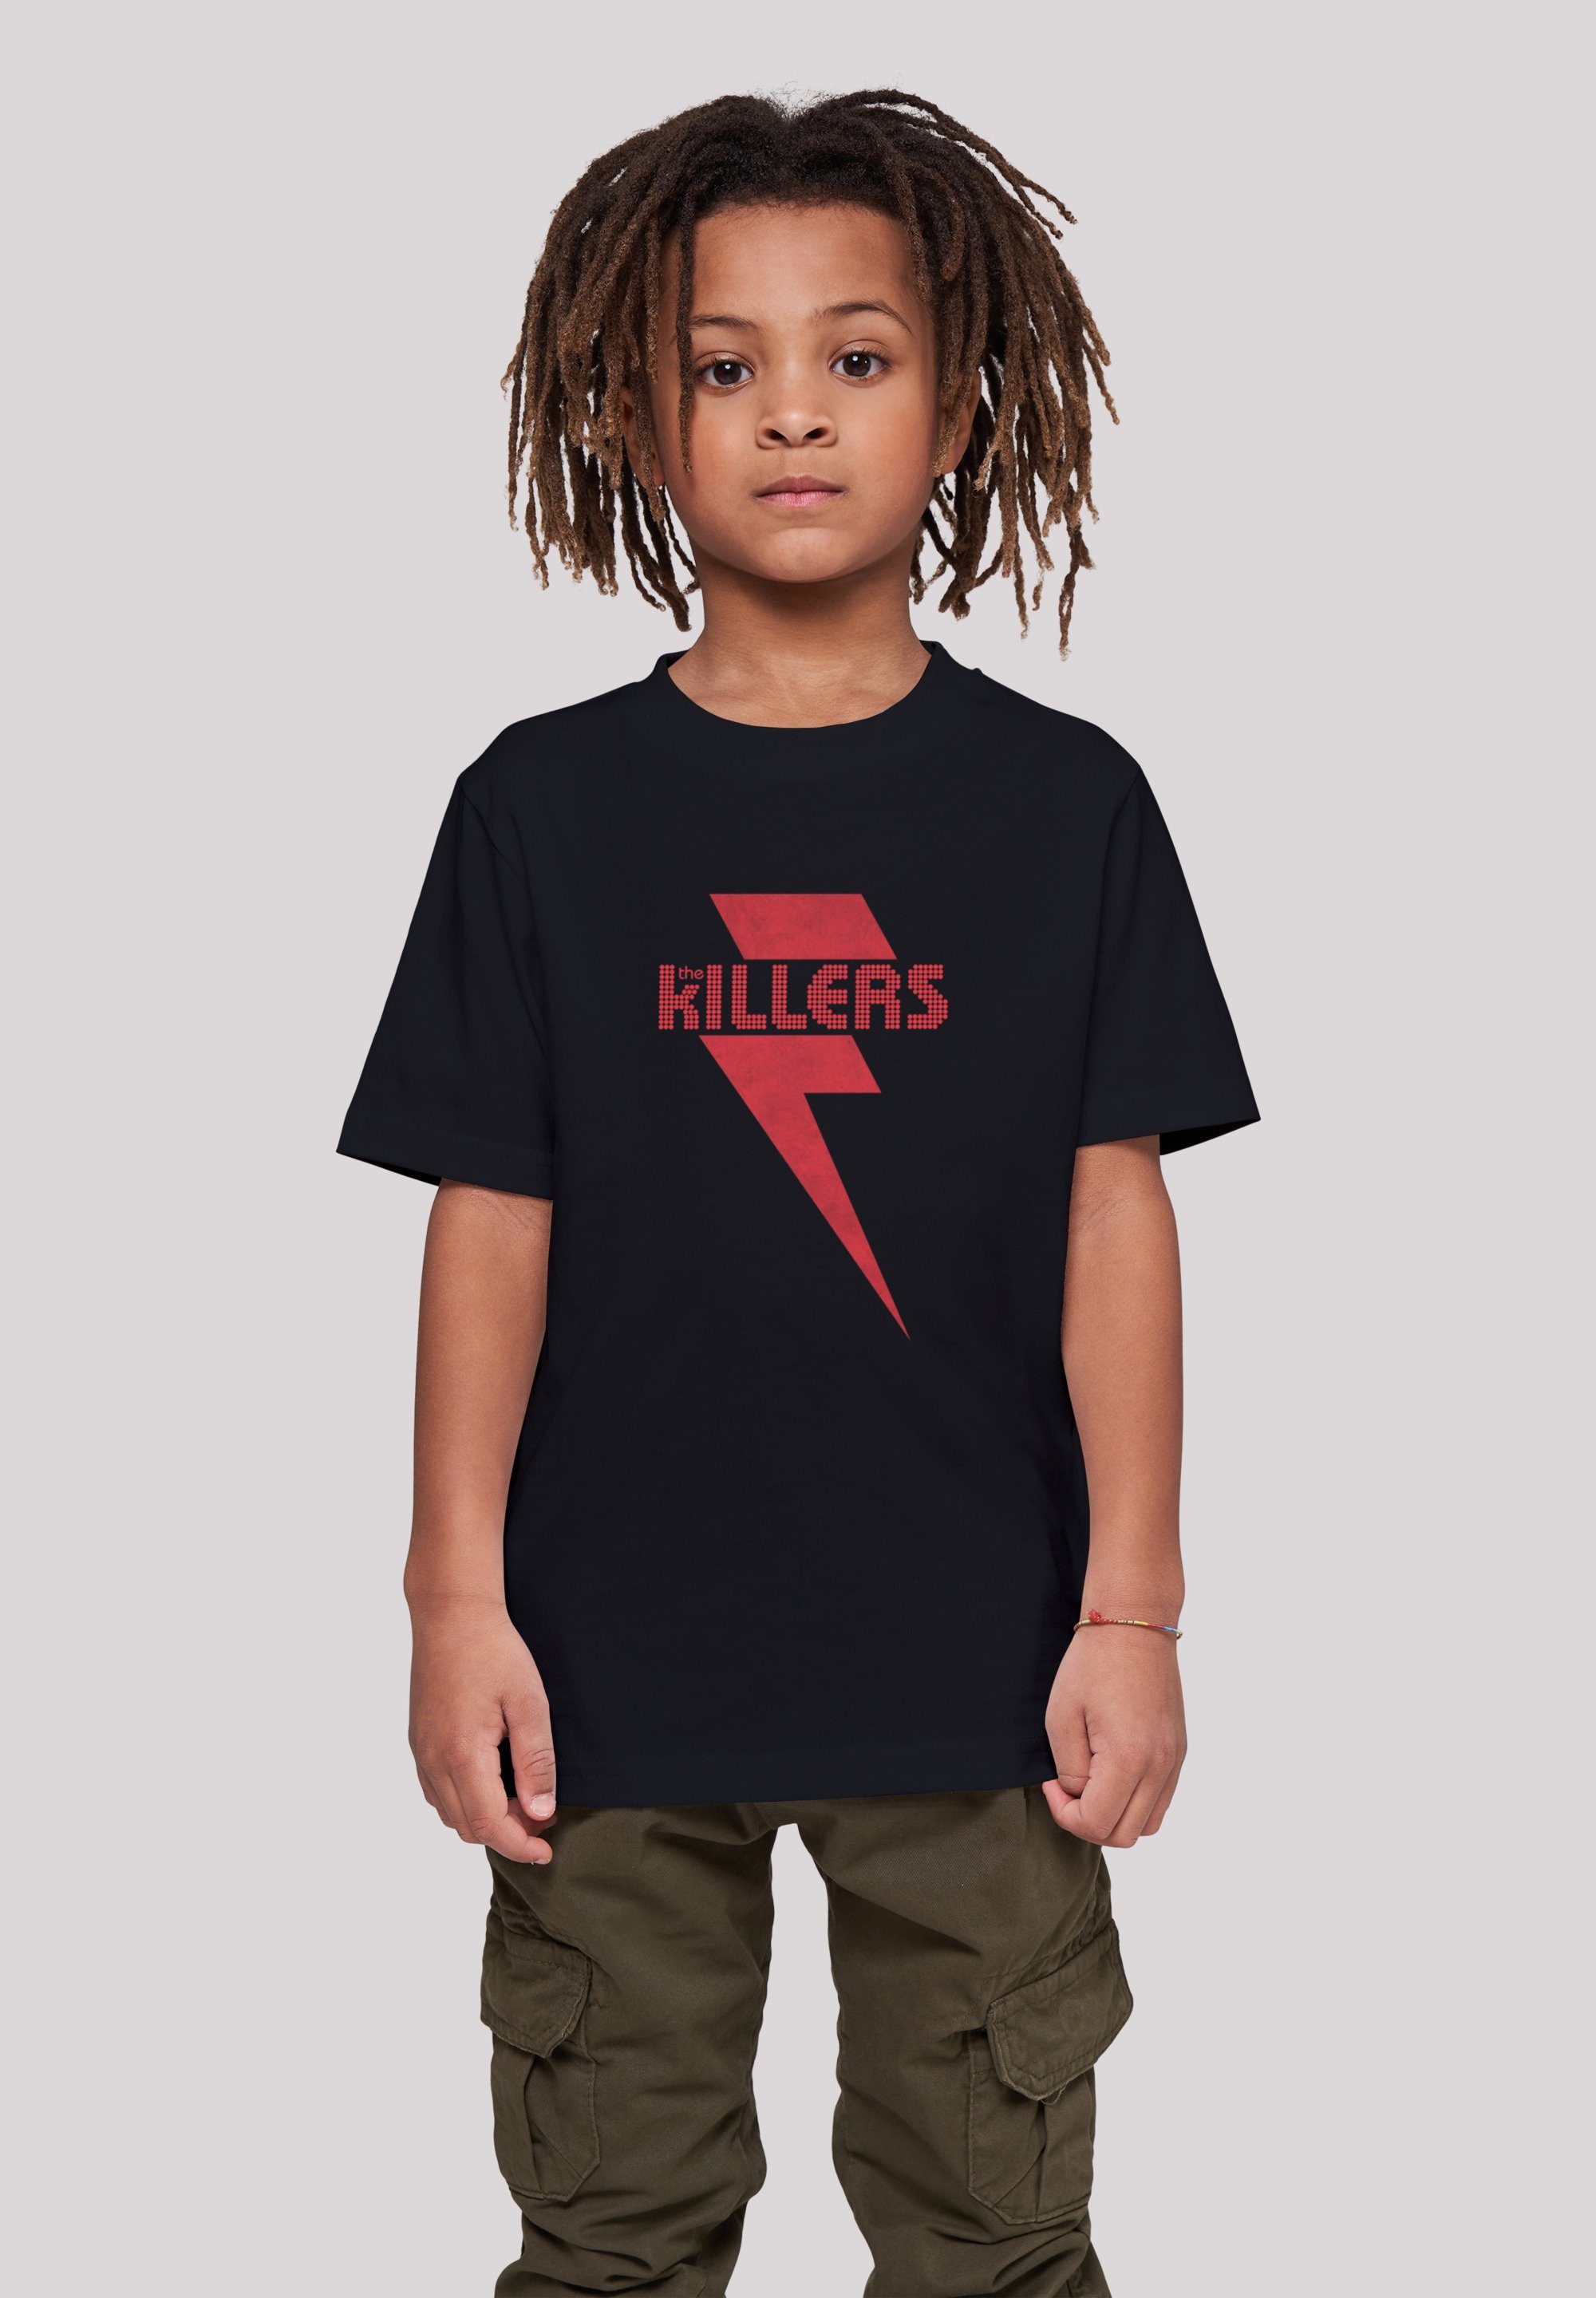 T-Shirt Rock Print Bolt The Band Killers F4NT4STIC schwarz Red